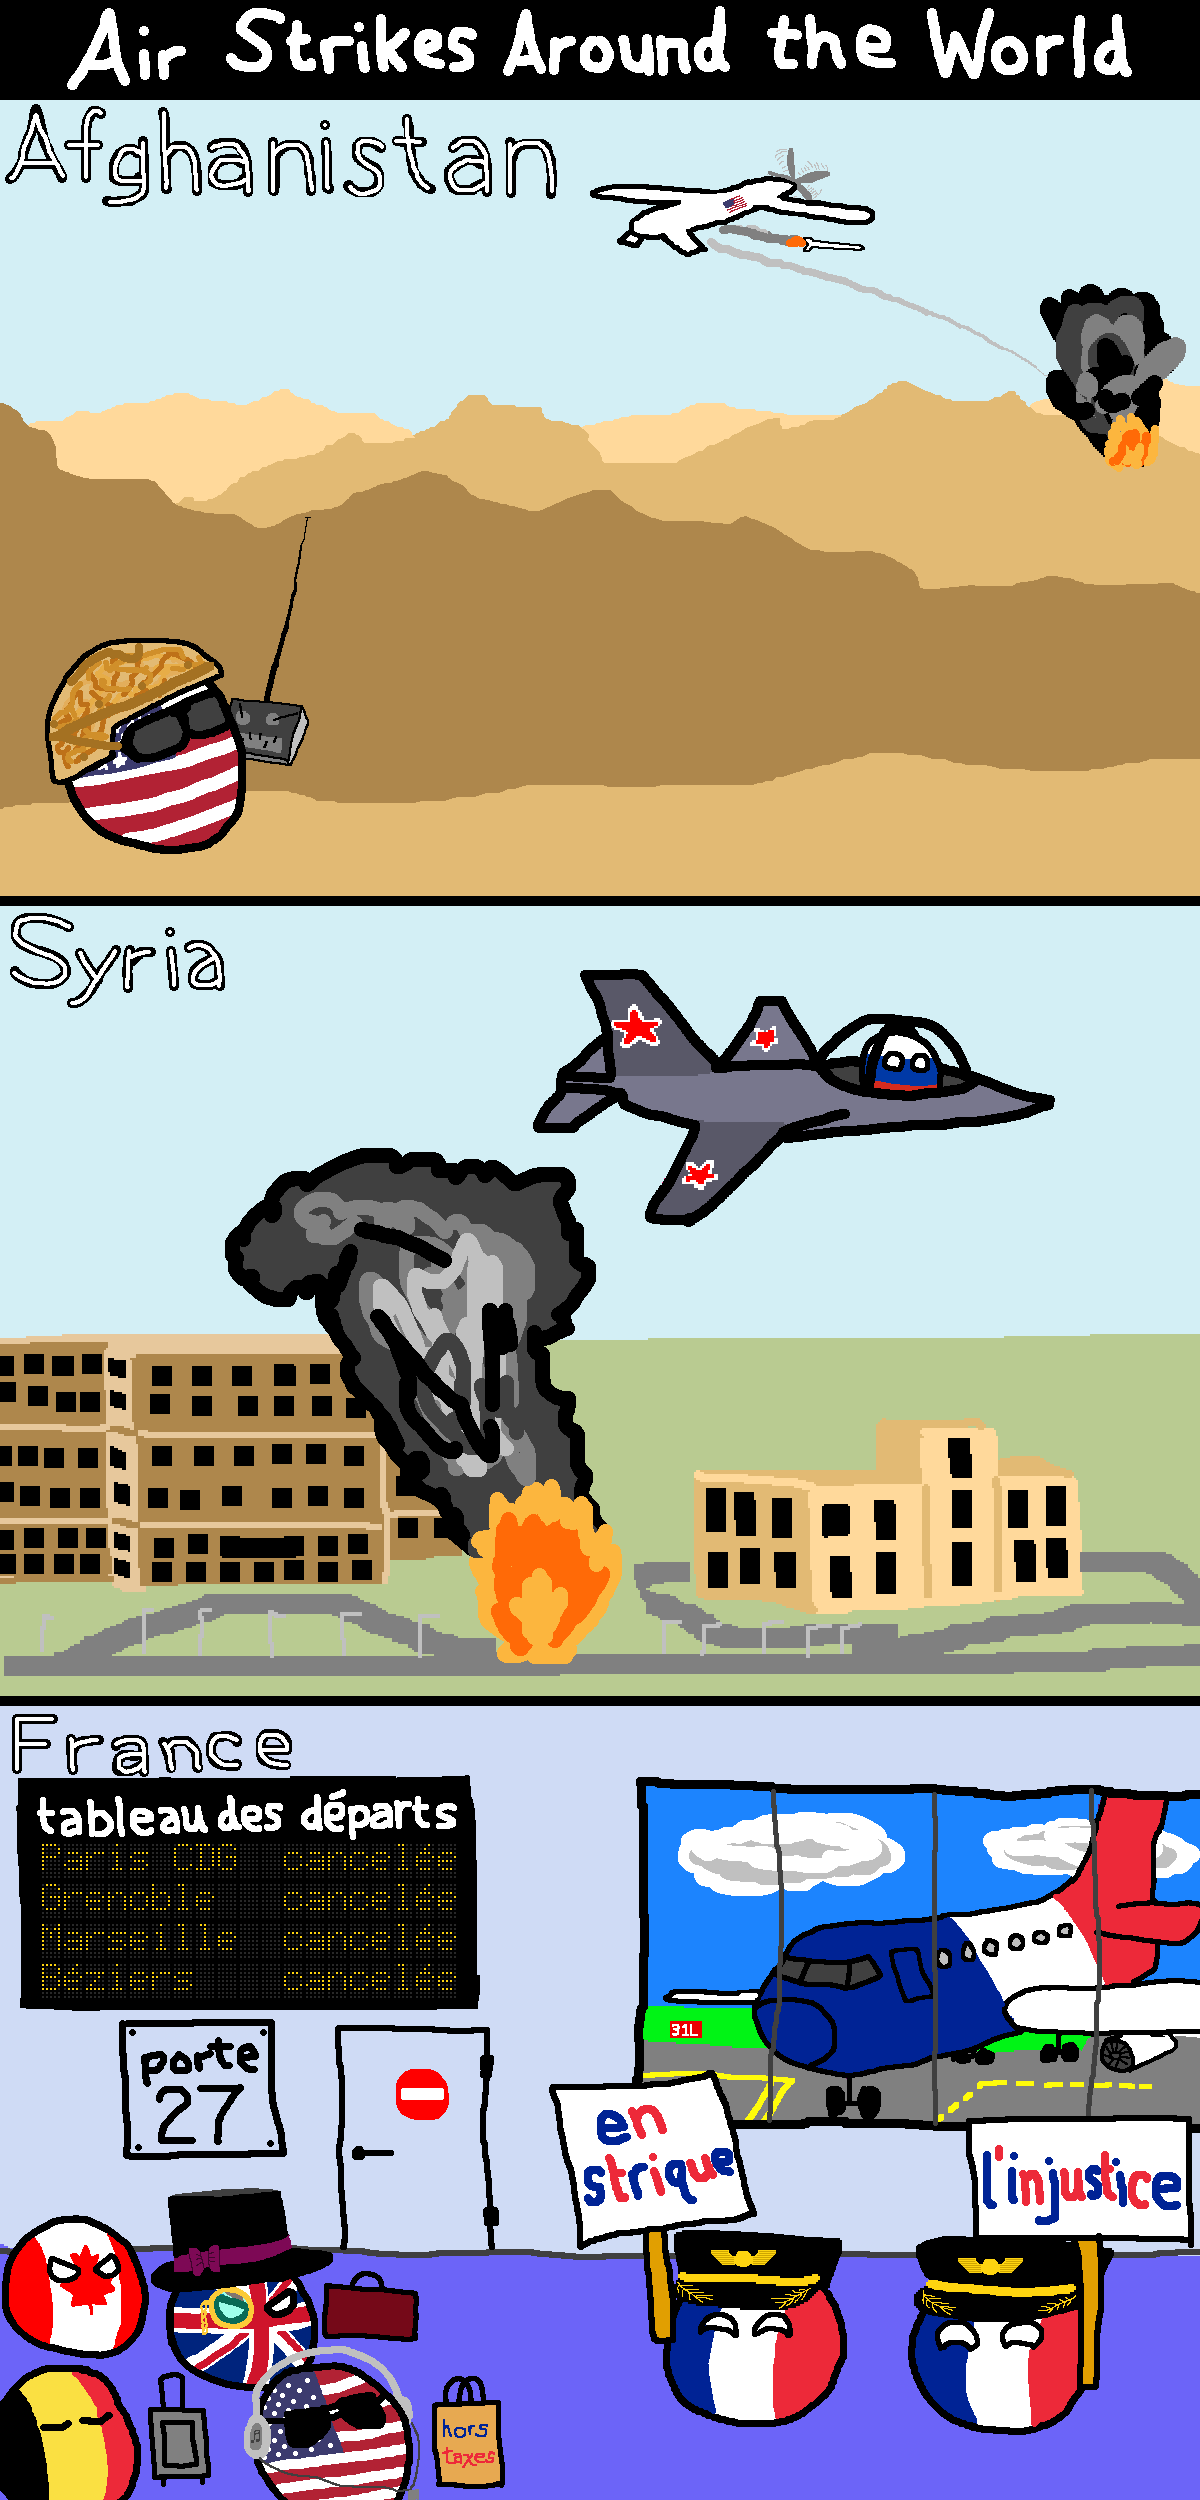 Air strikes around the world